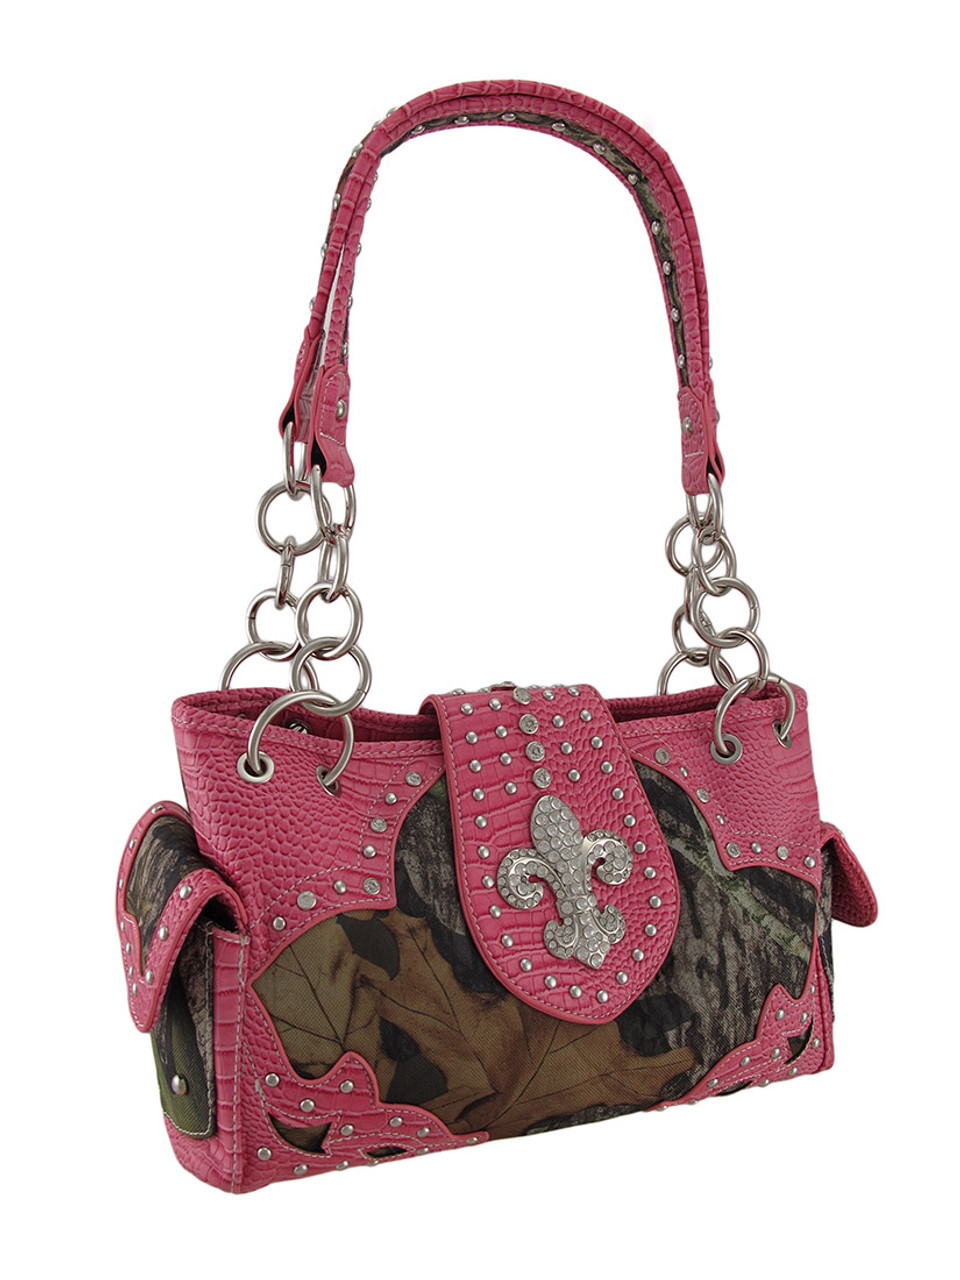 Mossy Oak Camouflage Pink Cross Purse Handbag